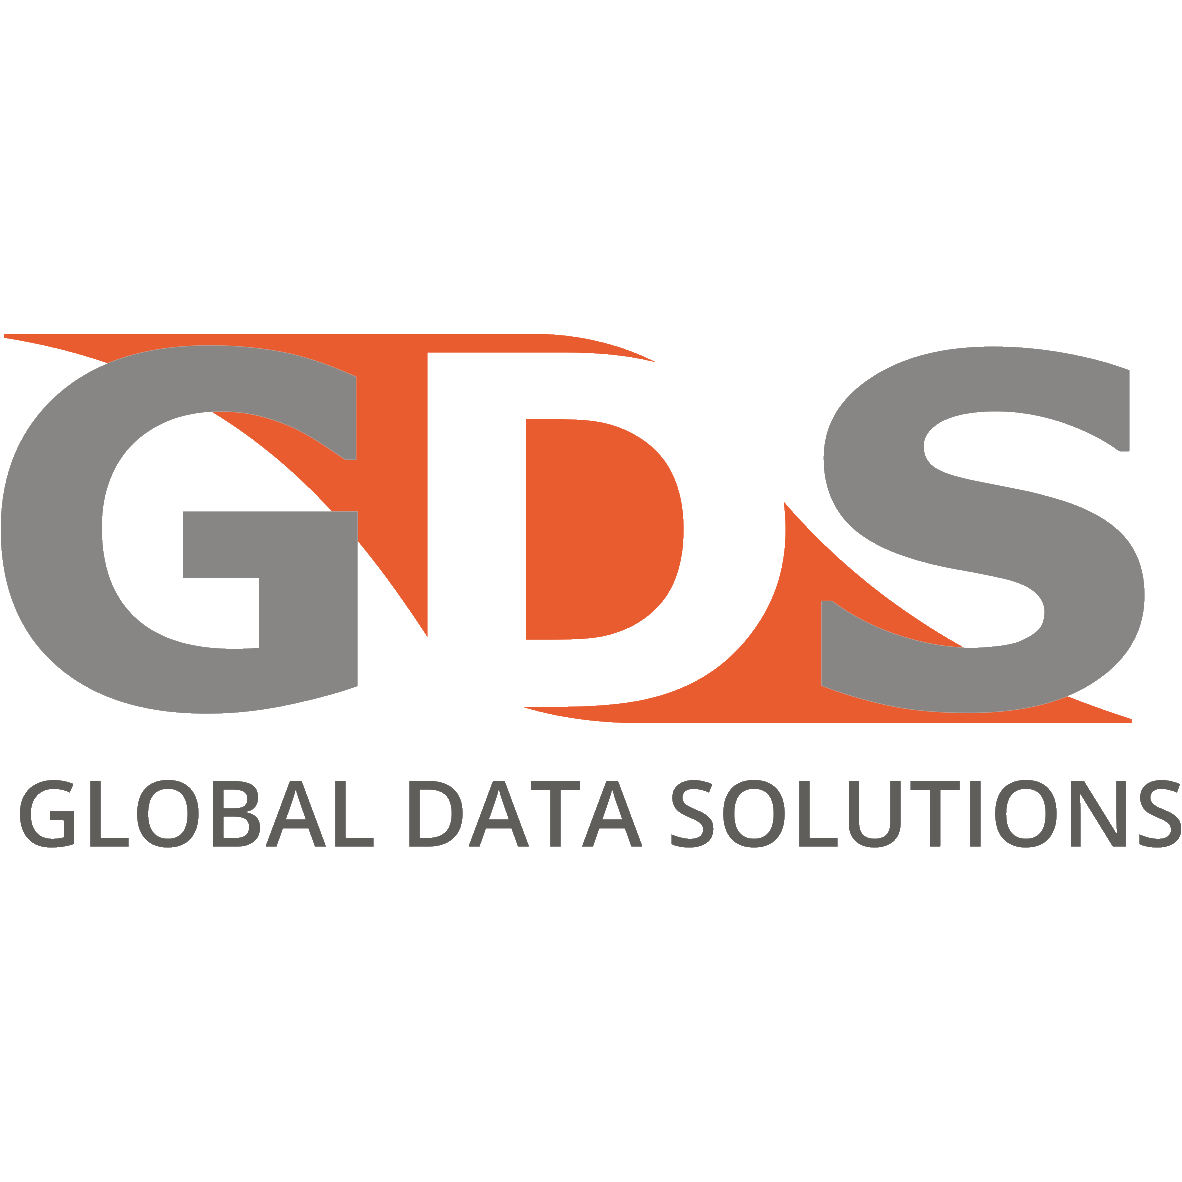 GDS Logo - GDS LLC Client Reviews | Clutch.co